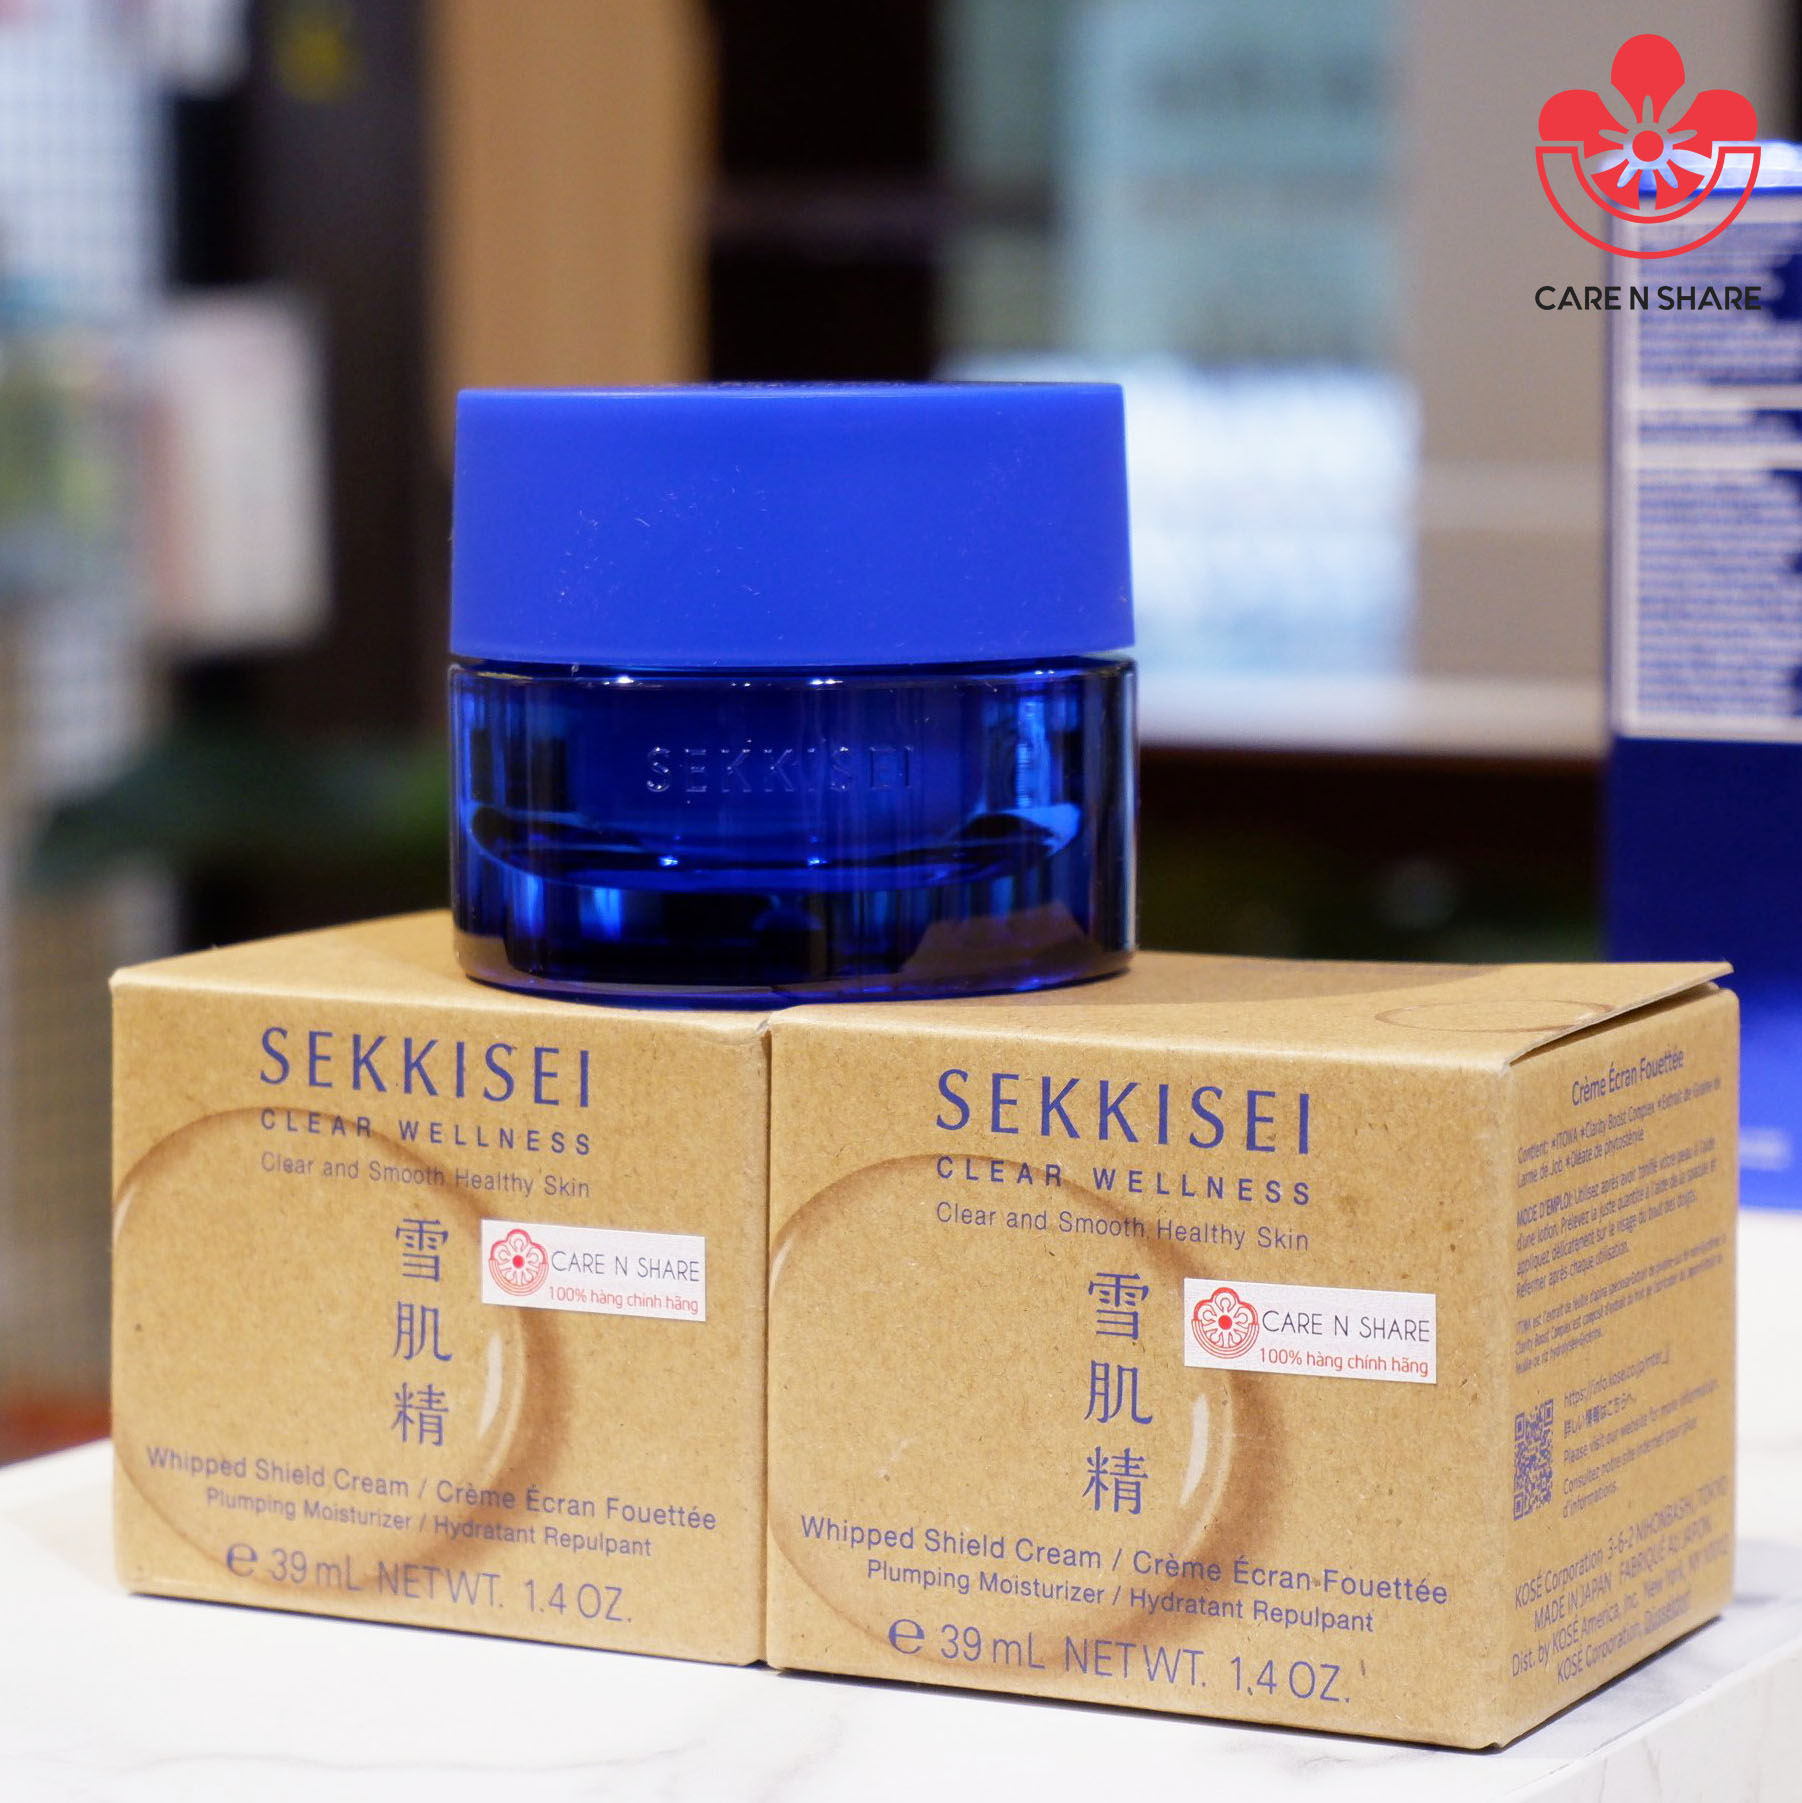 Sekkisei Clear Wellness Whipped shield cream